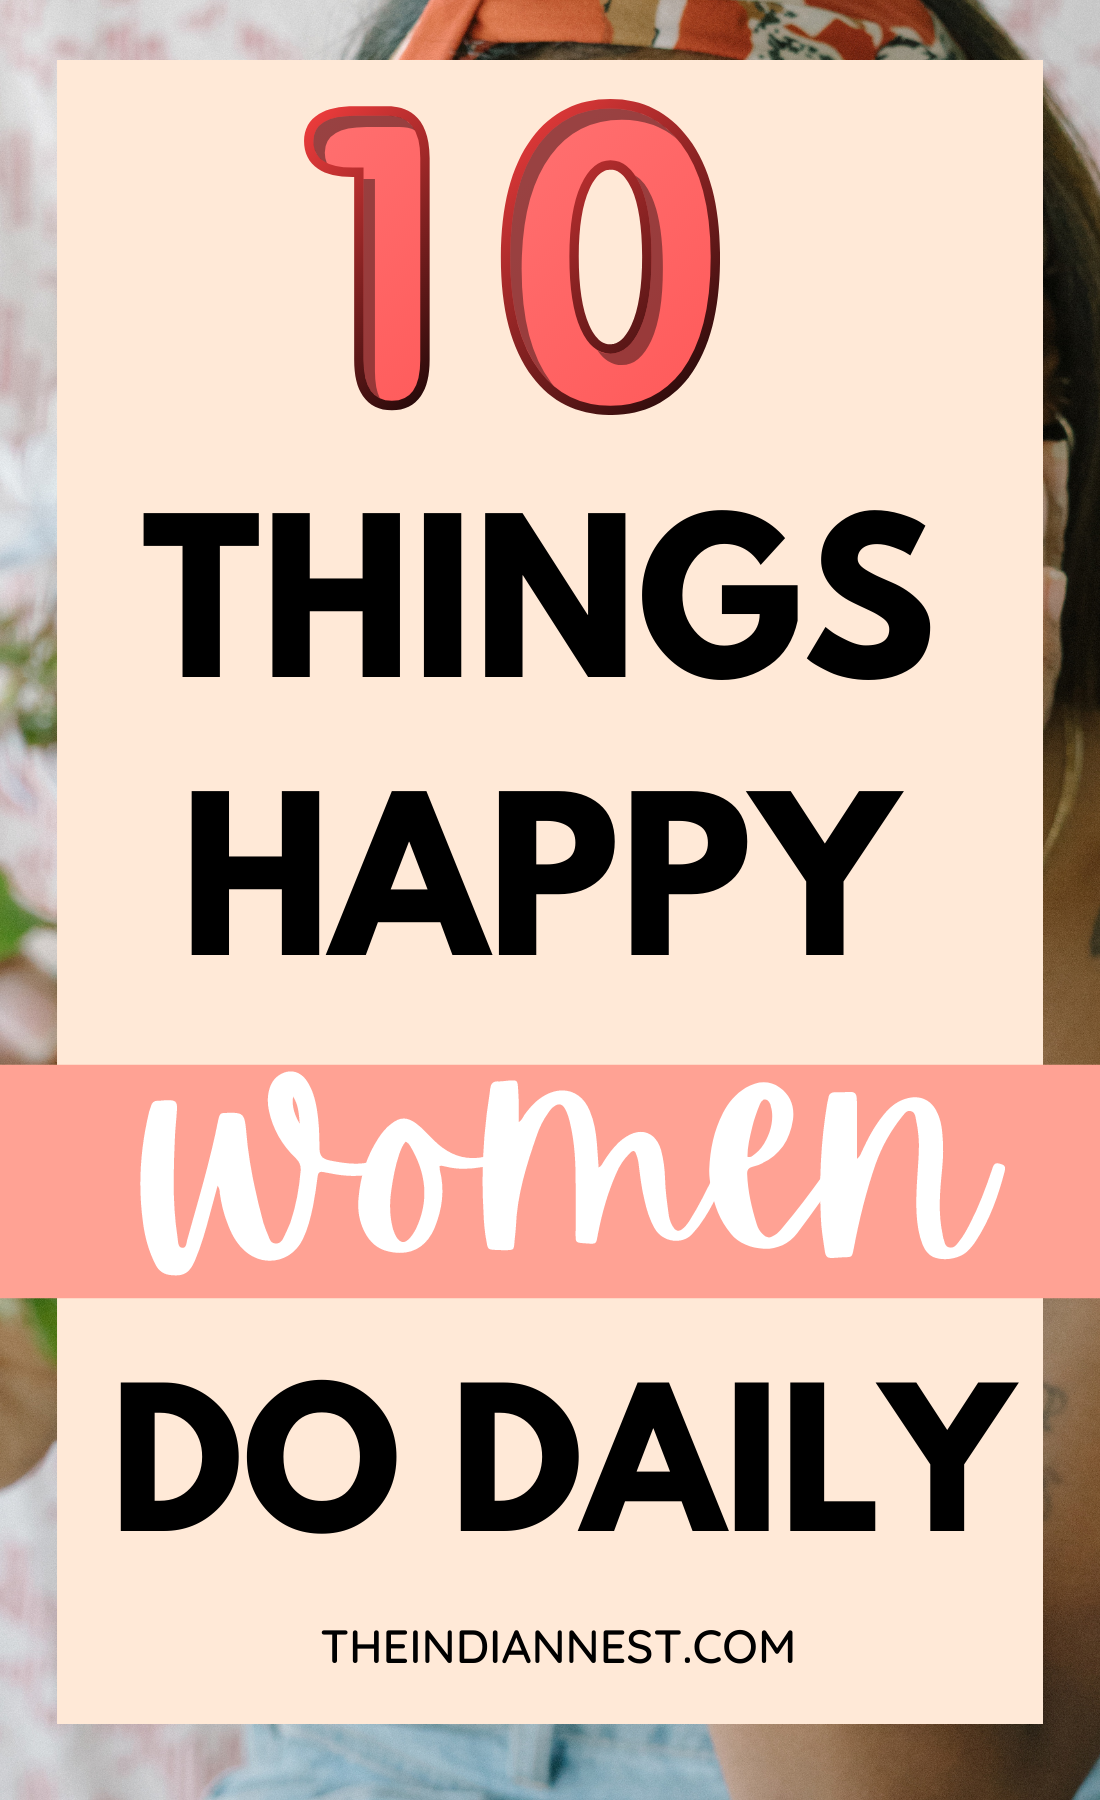 10 things happy women do daily.